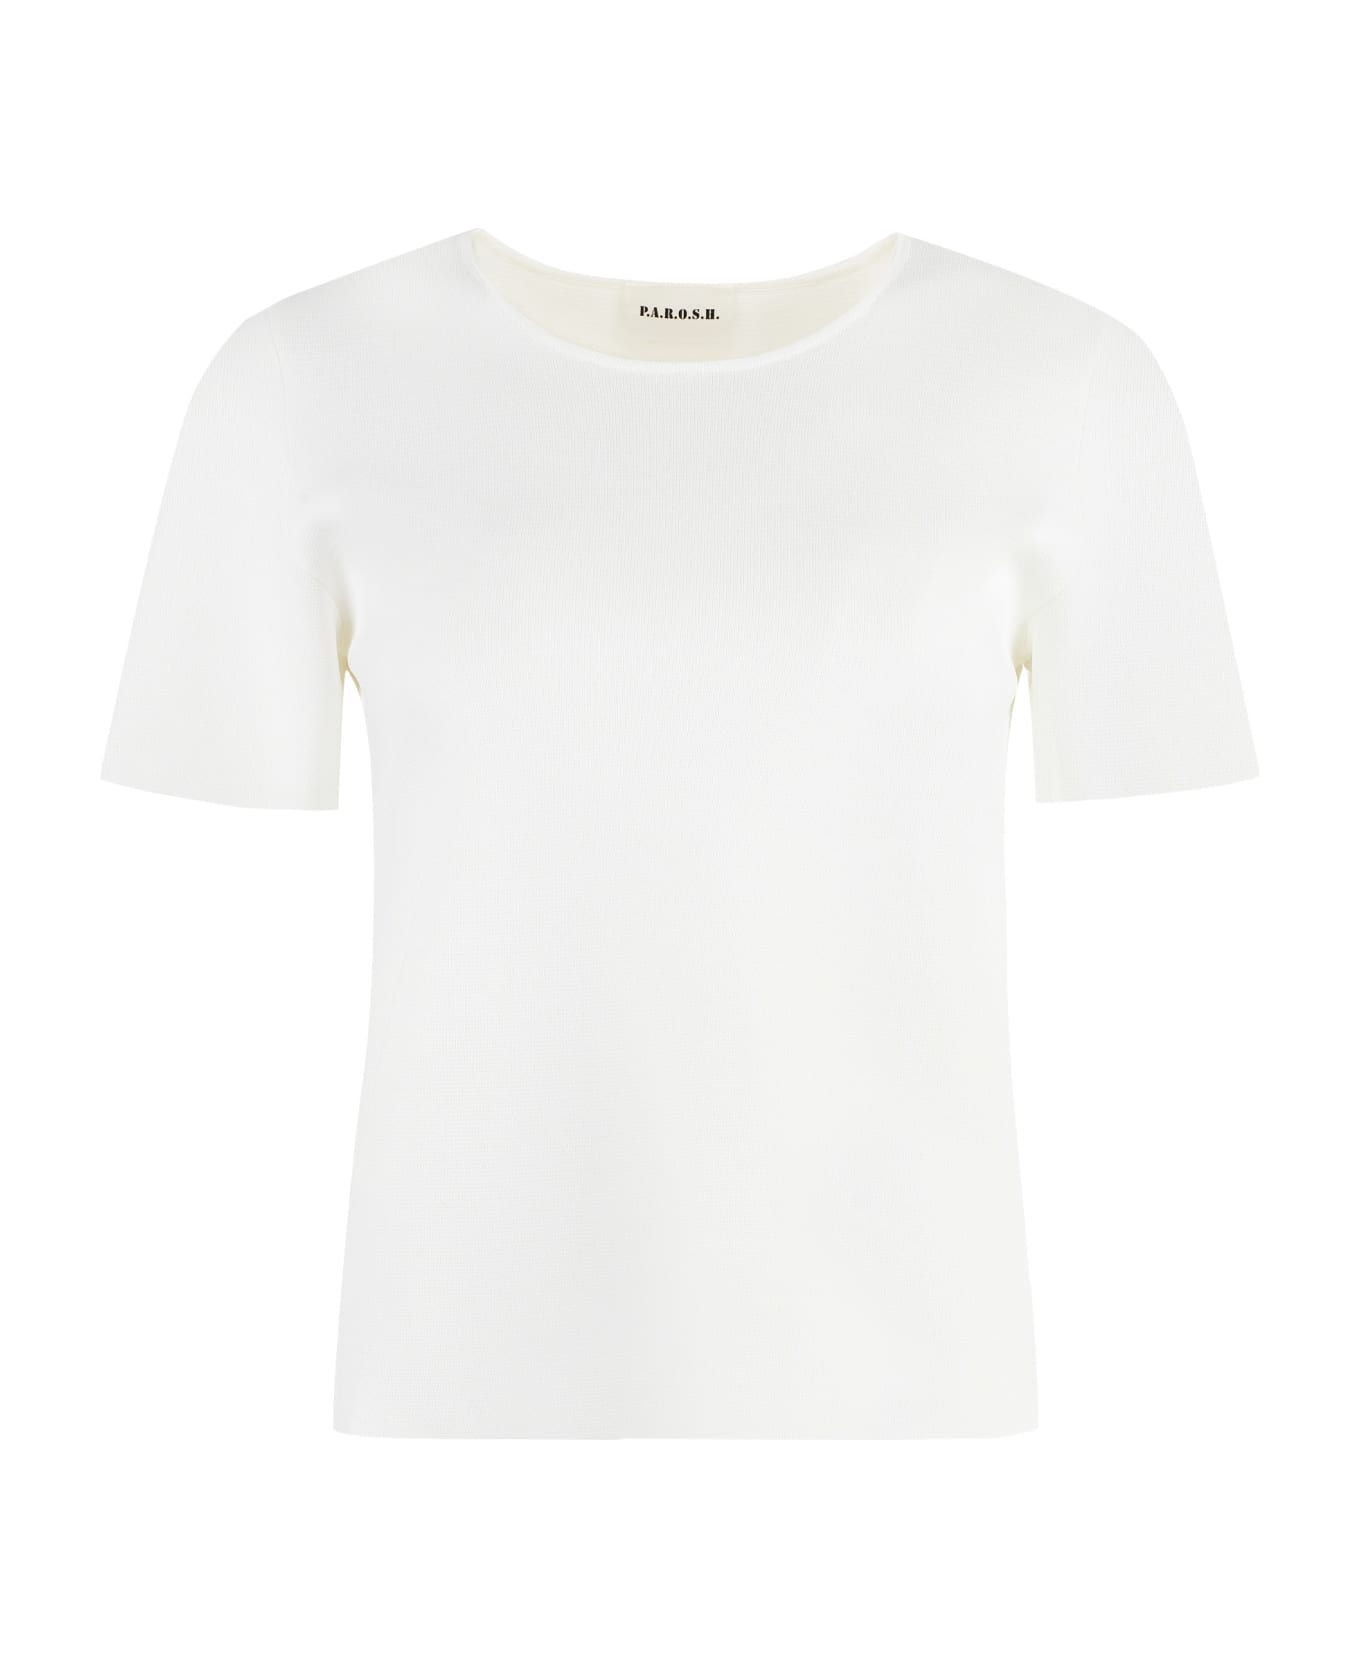 Parosh Knitted T-shirt - White